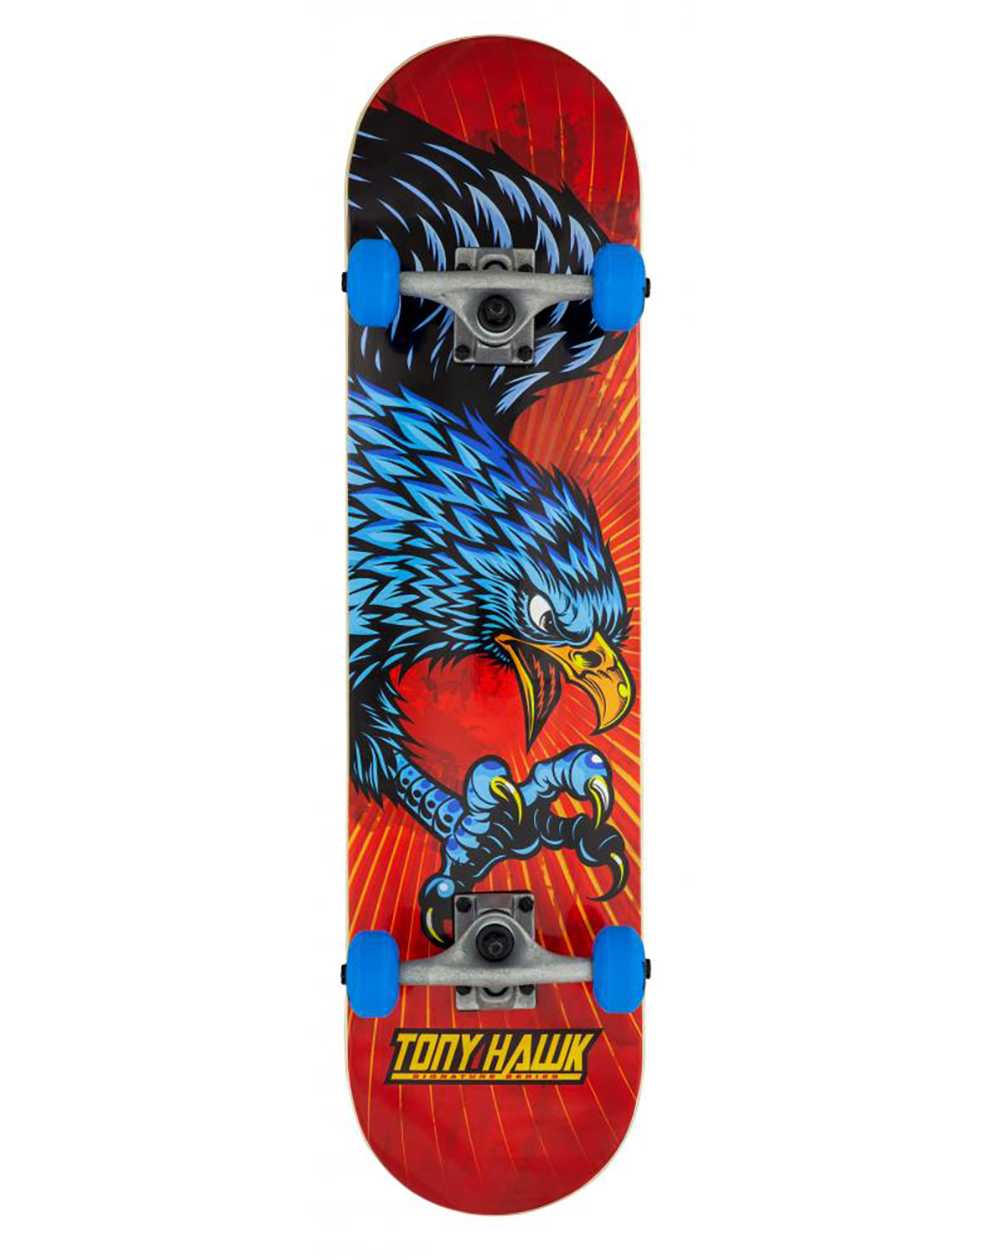 Tony Hawk Skateboard Complète Diving Hawk 7.75"